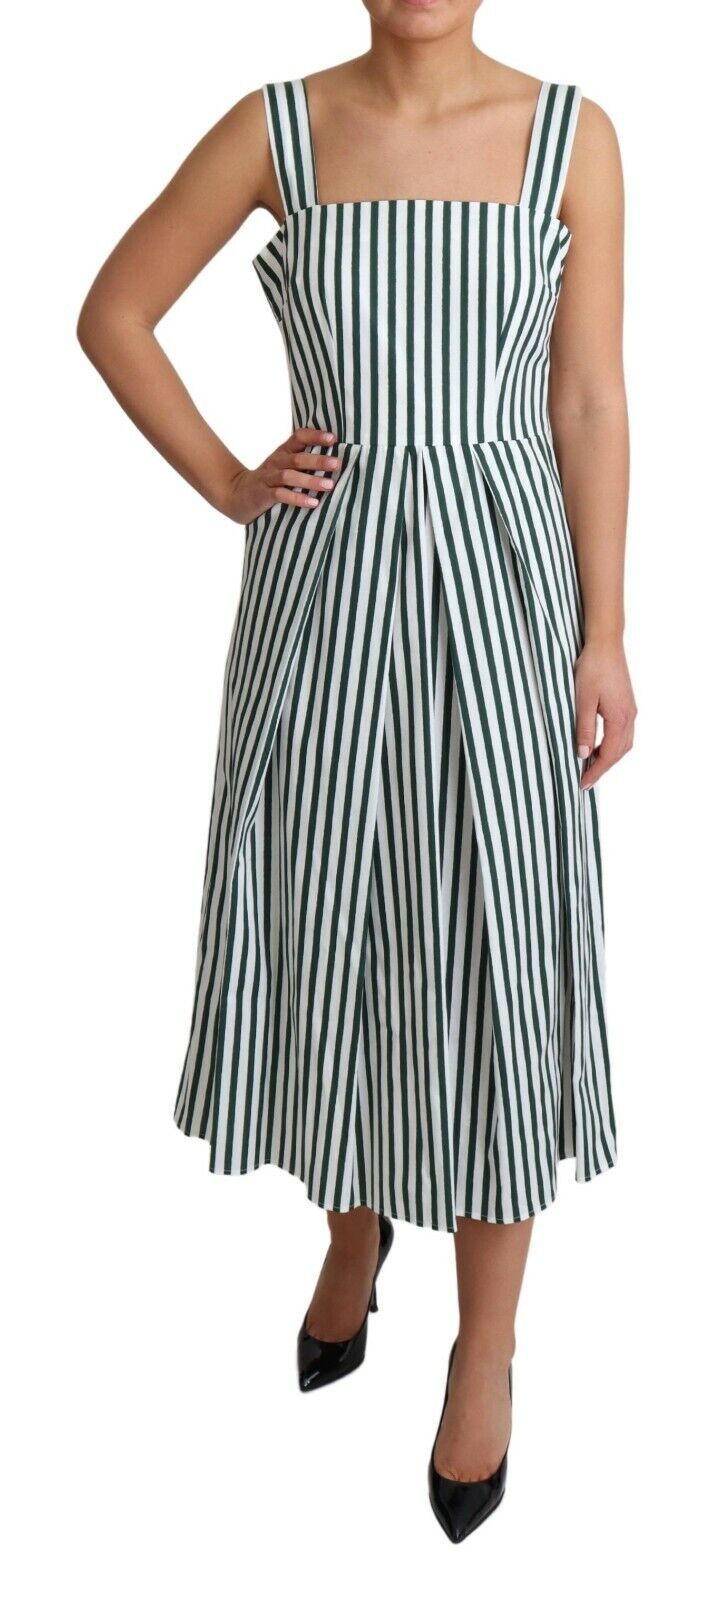 Dolce & Gabbana Green Striped Cotton A-Line Dress